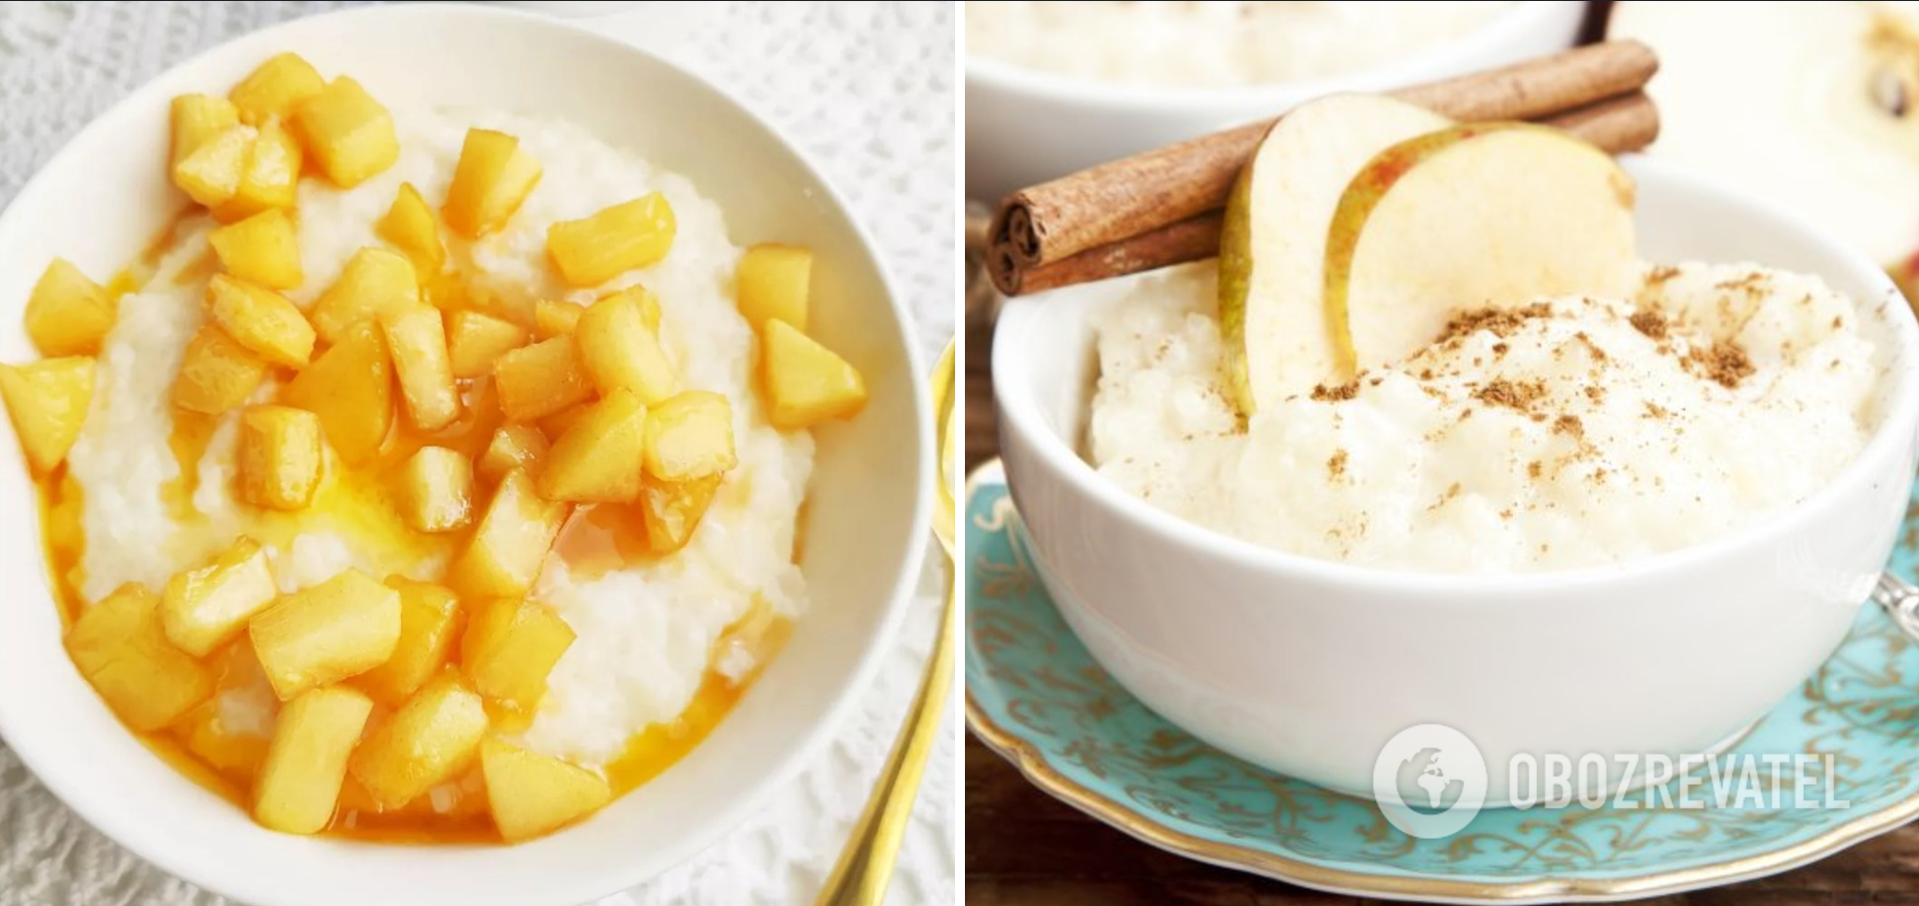 Rice porridge with apple and cinnamon